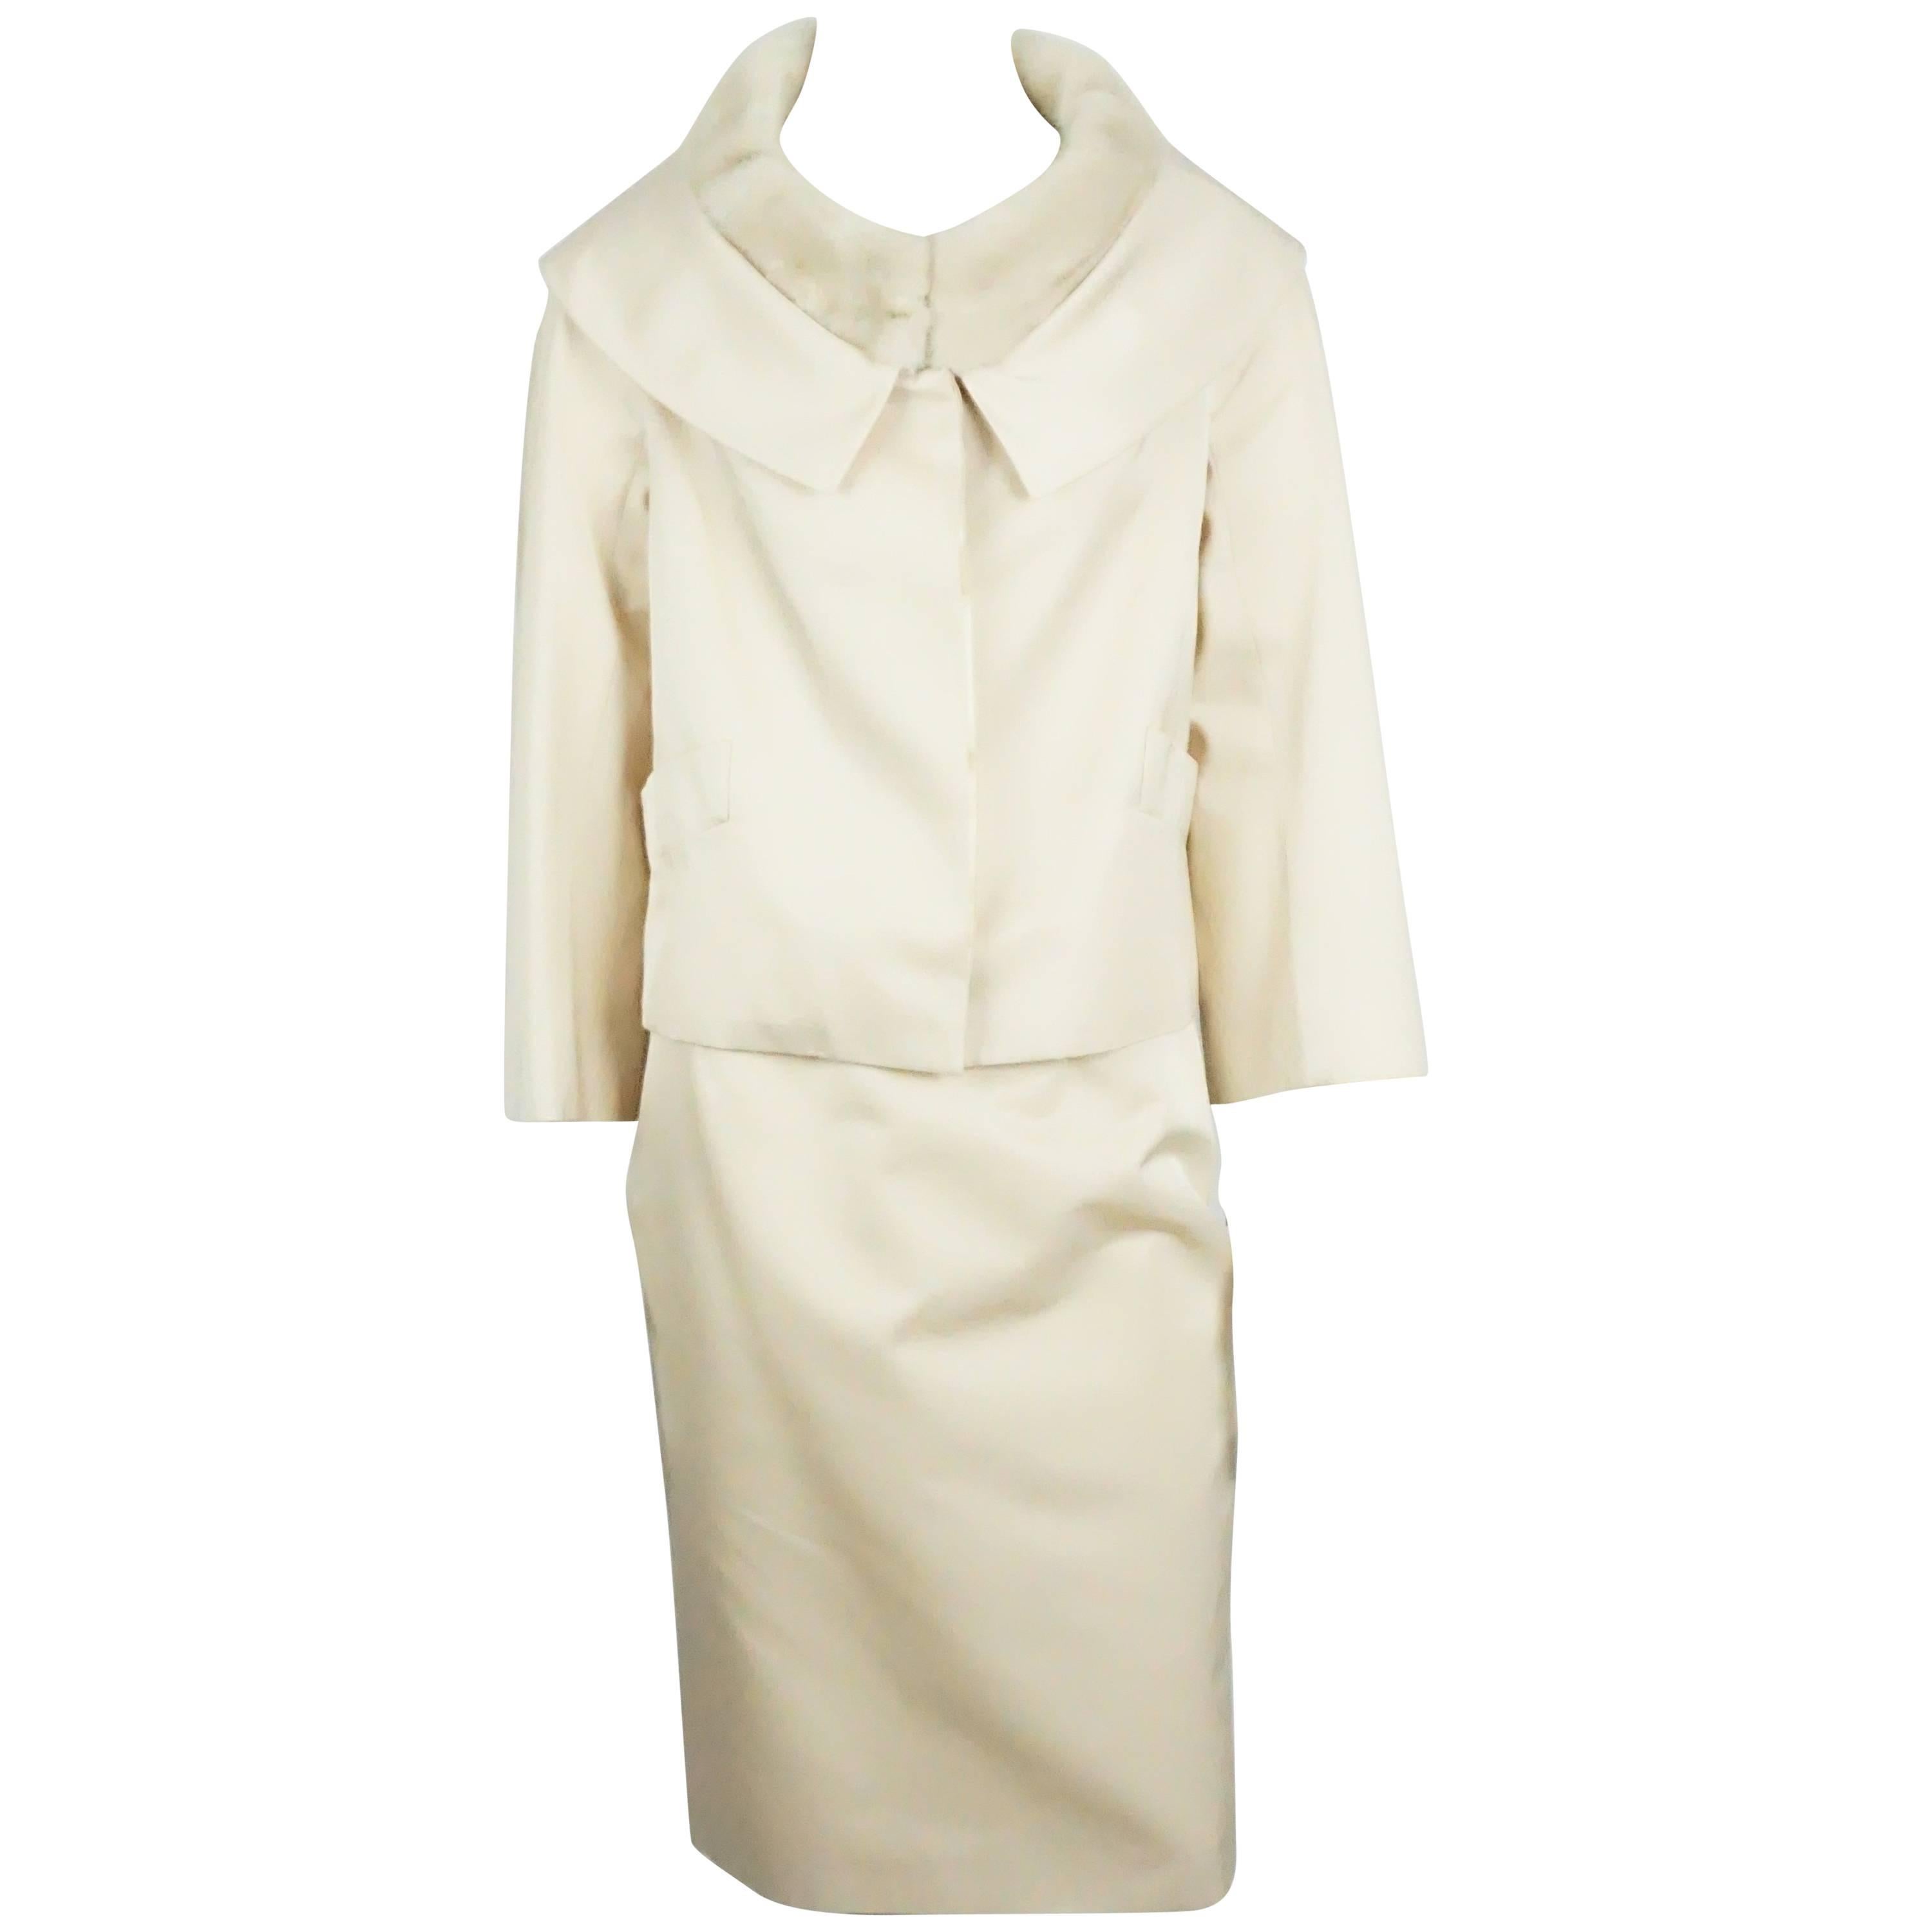 Christian Dior Ecru Silk Skirt Suit with Mink Collar - 38 - NWT